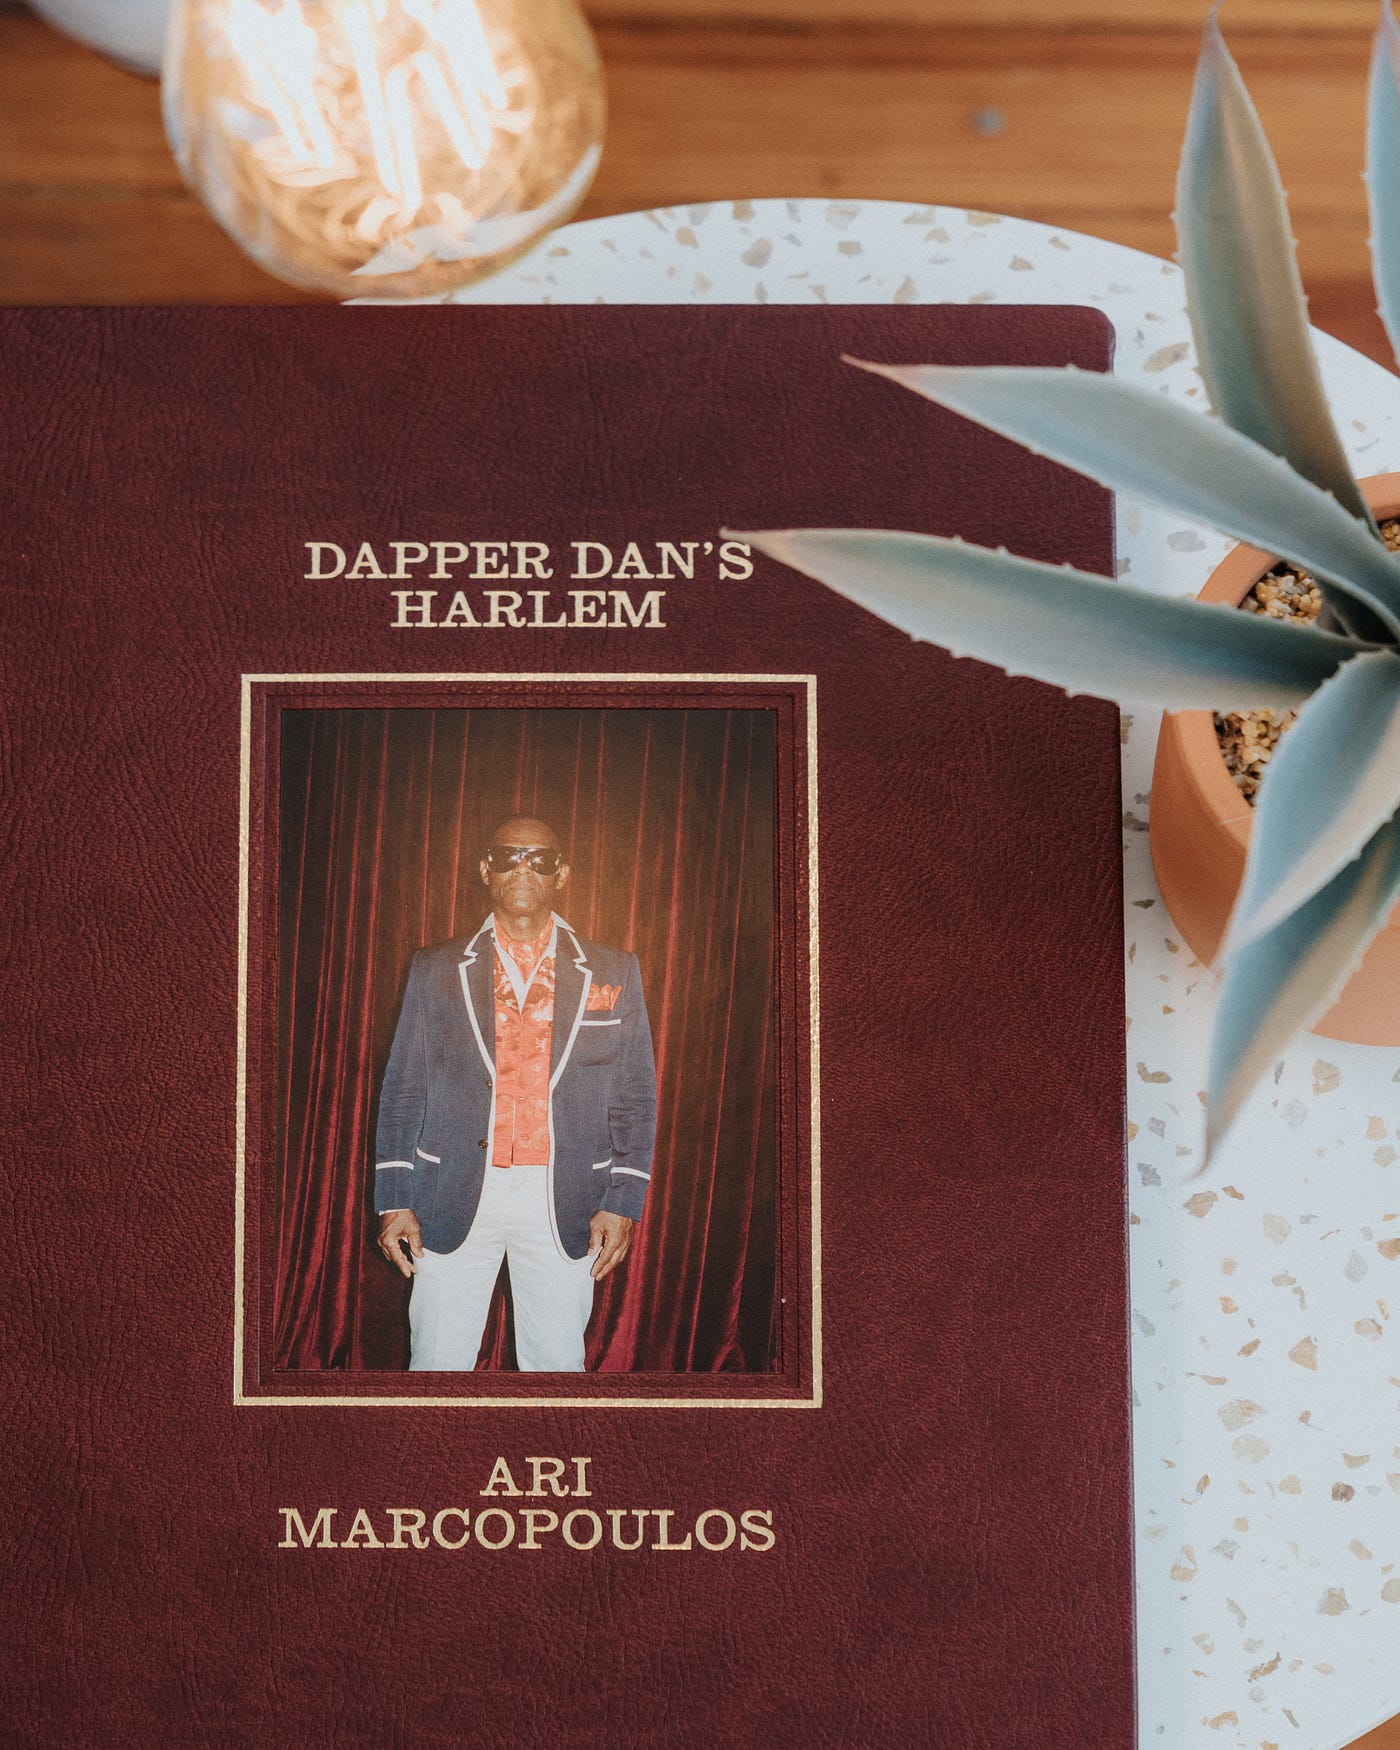 The Renaissance: 'Dapper Dan's Harlem' | by John Gotty | Medium